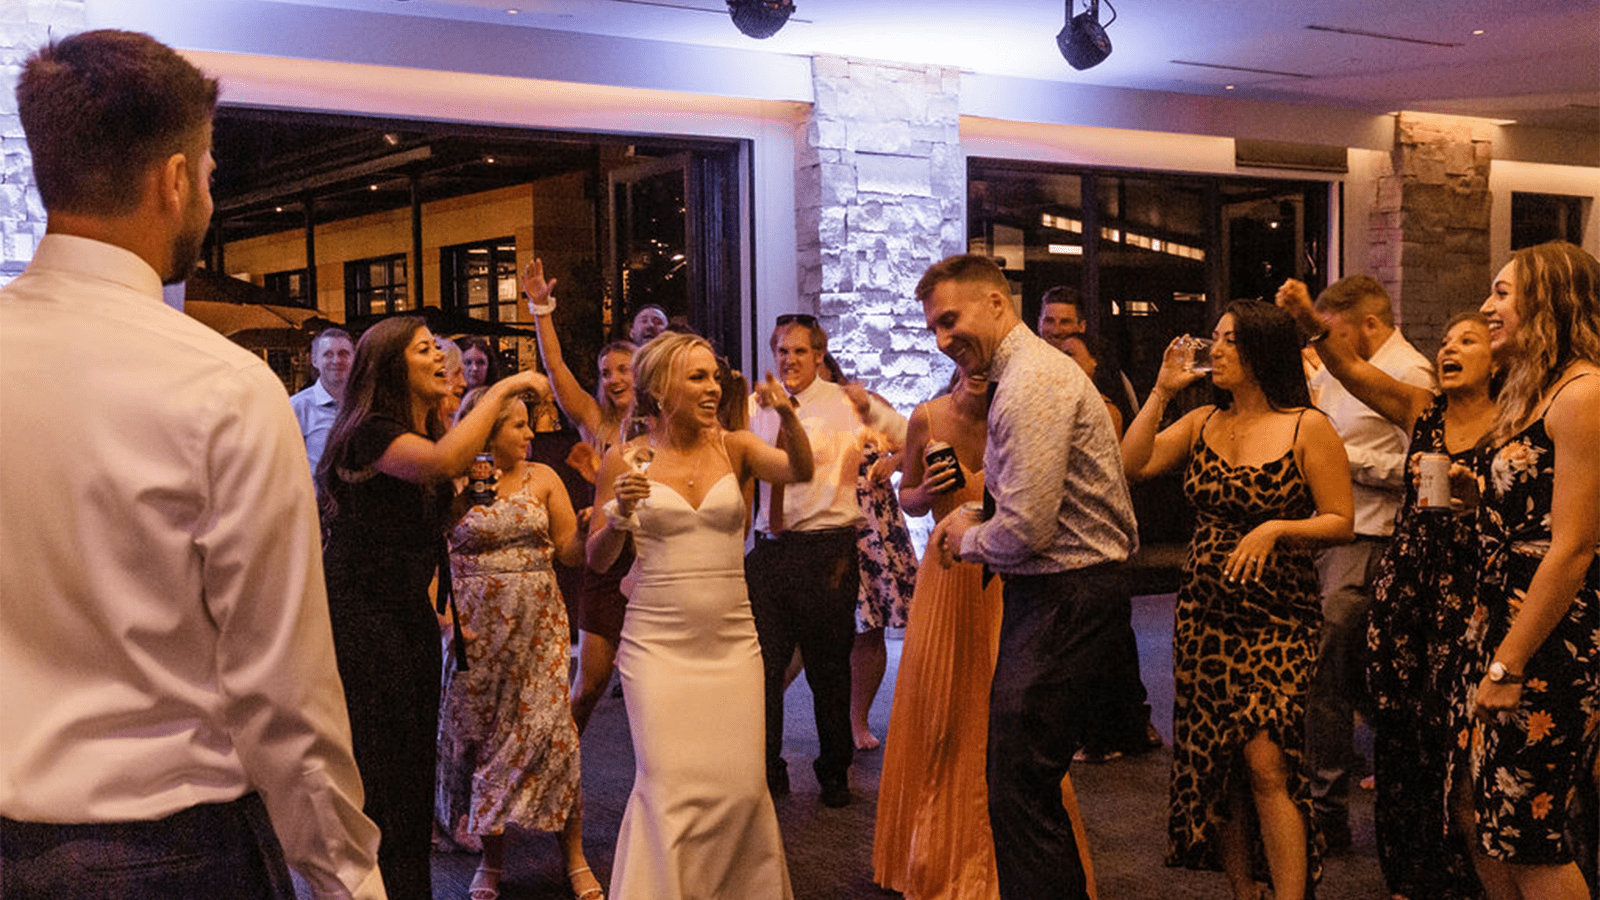 Guests dance around bride on dance floor, purple lighting sets the mood